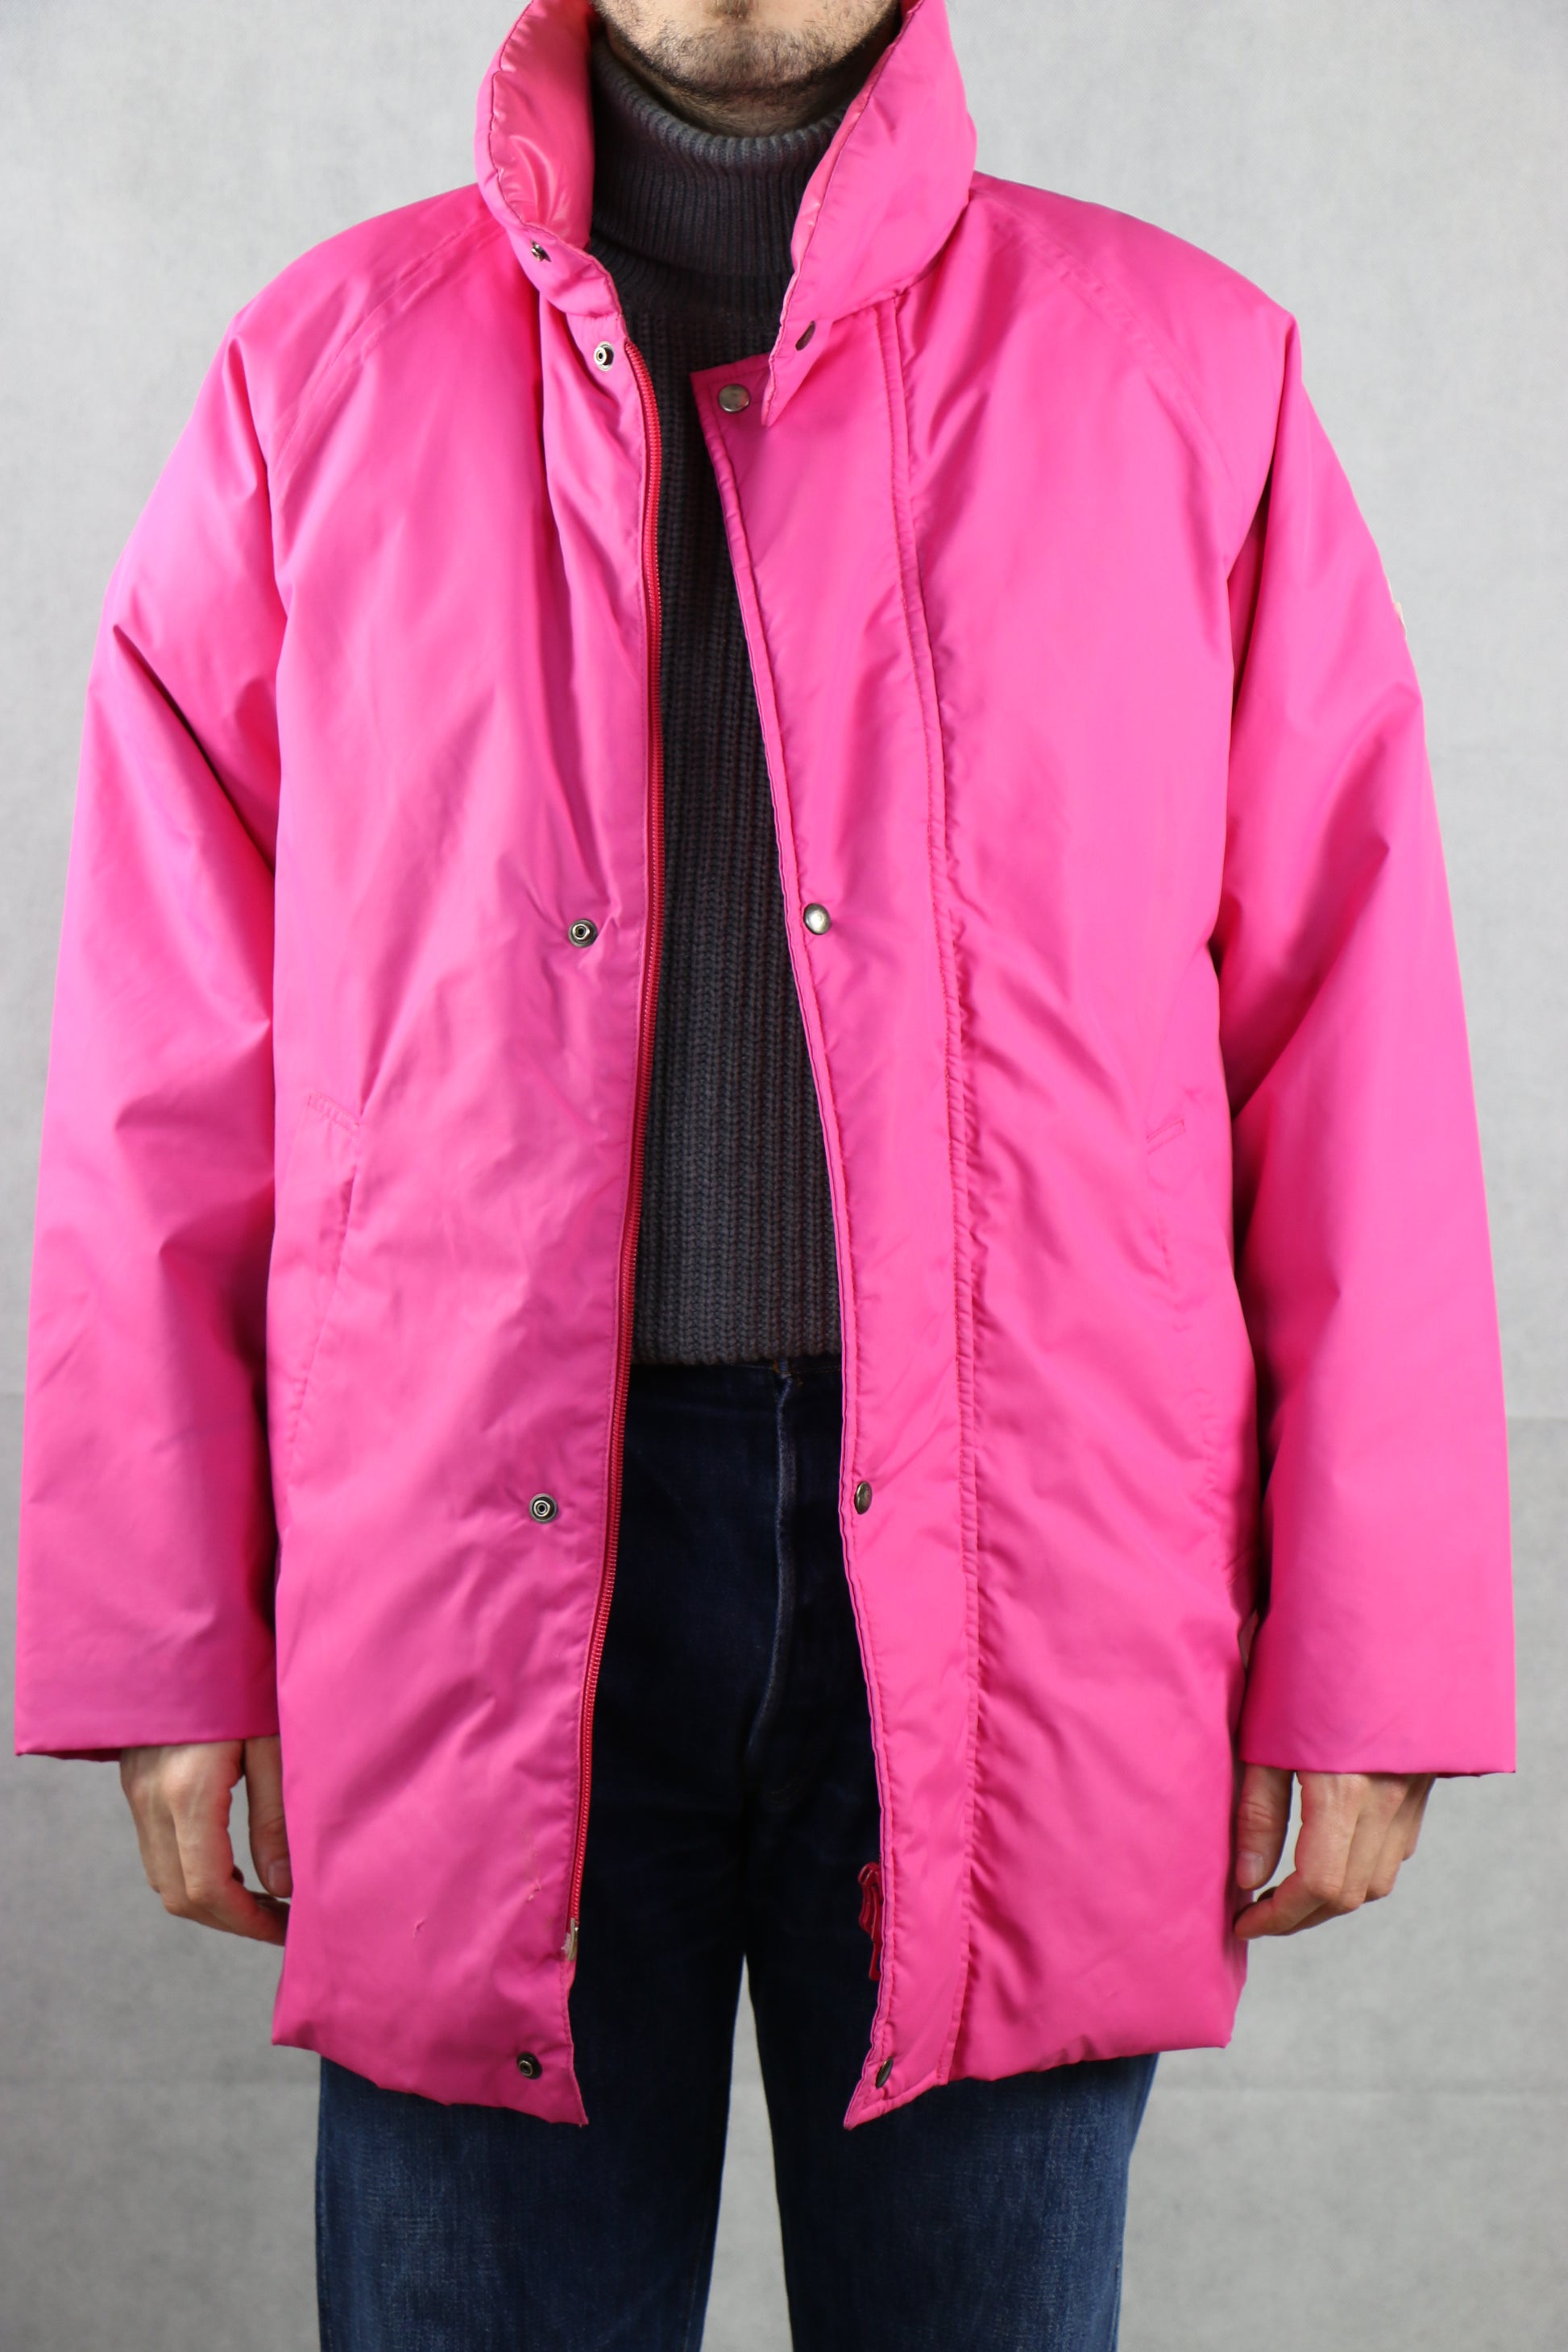 Moncler 'Pink' Down Jacket, clochard92.com